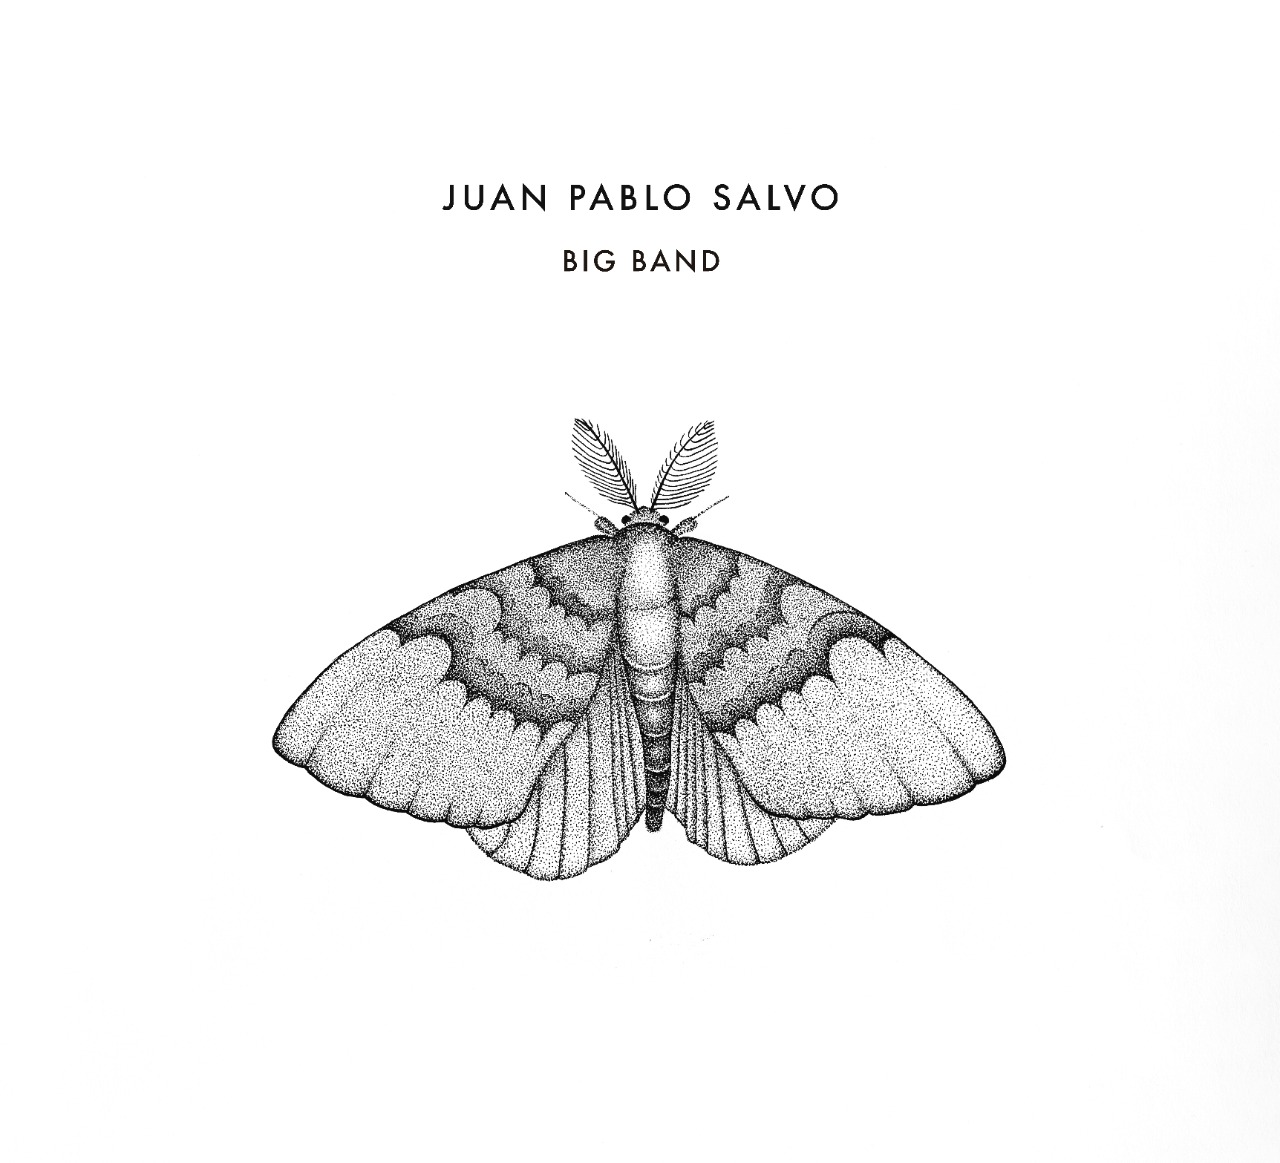 Juan Pablo Salvo Big Band jazz album Chile progjazz caratula cover